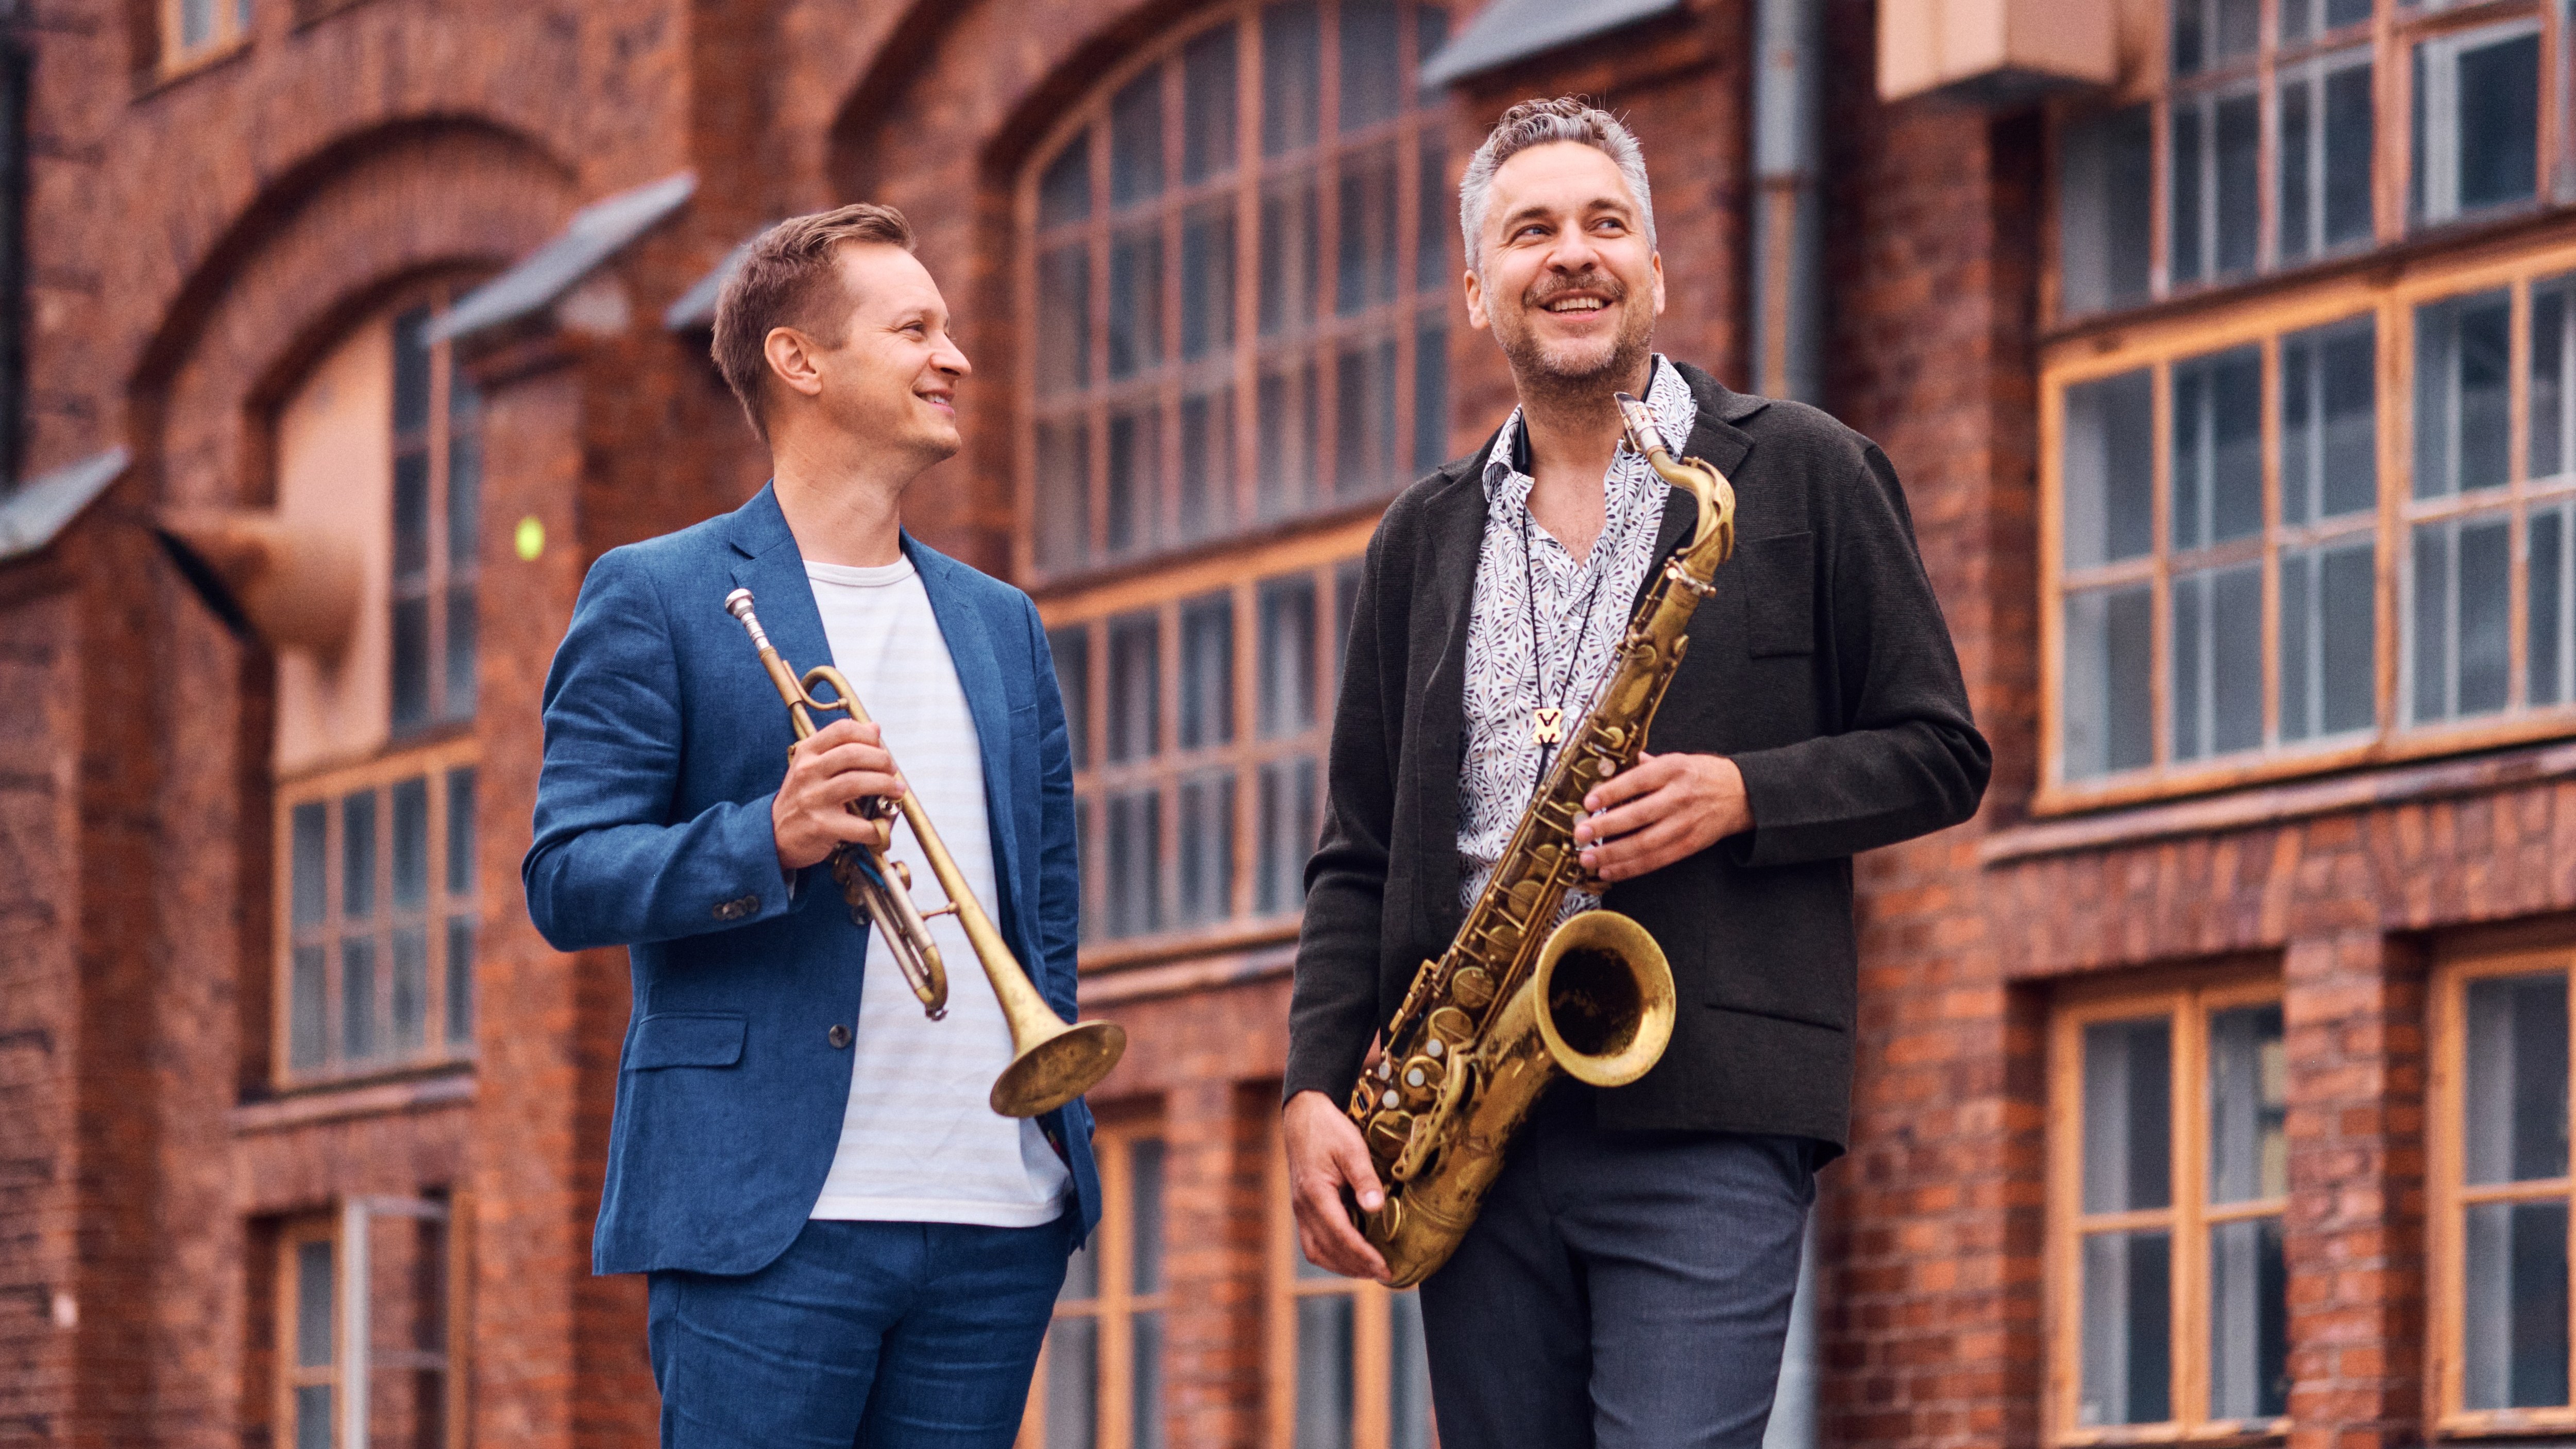 Jazz album of the week: Finnish sax meets New Orleans sass